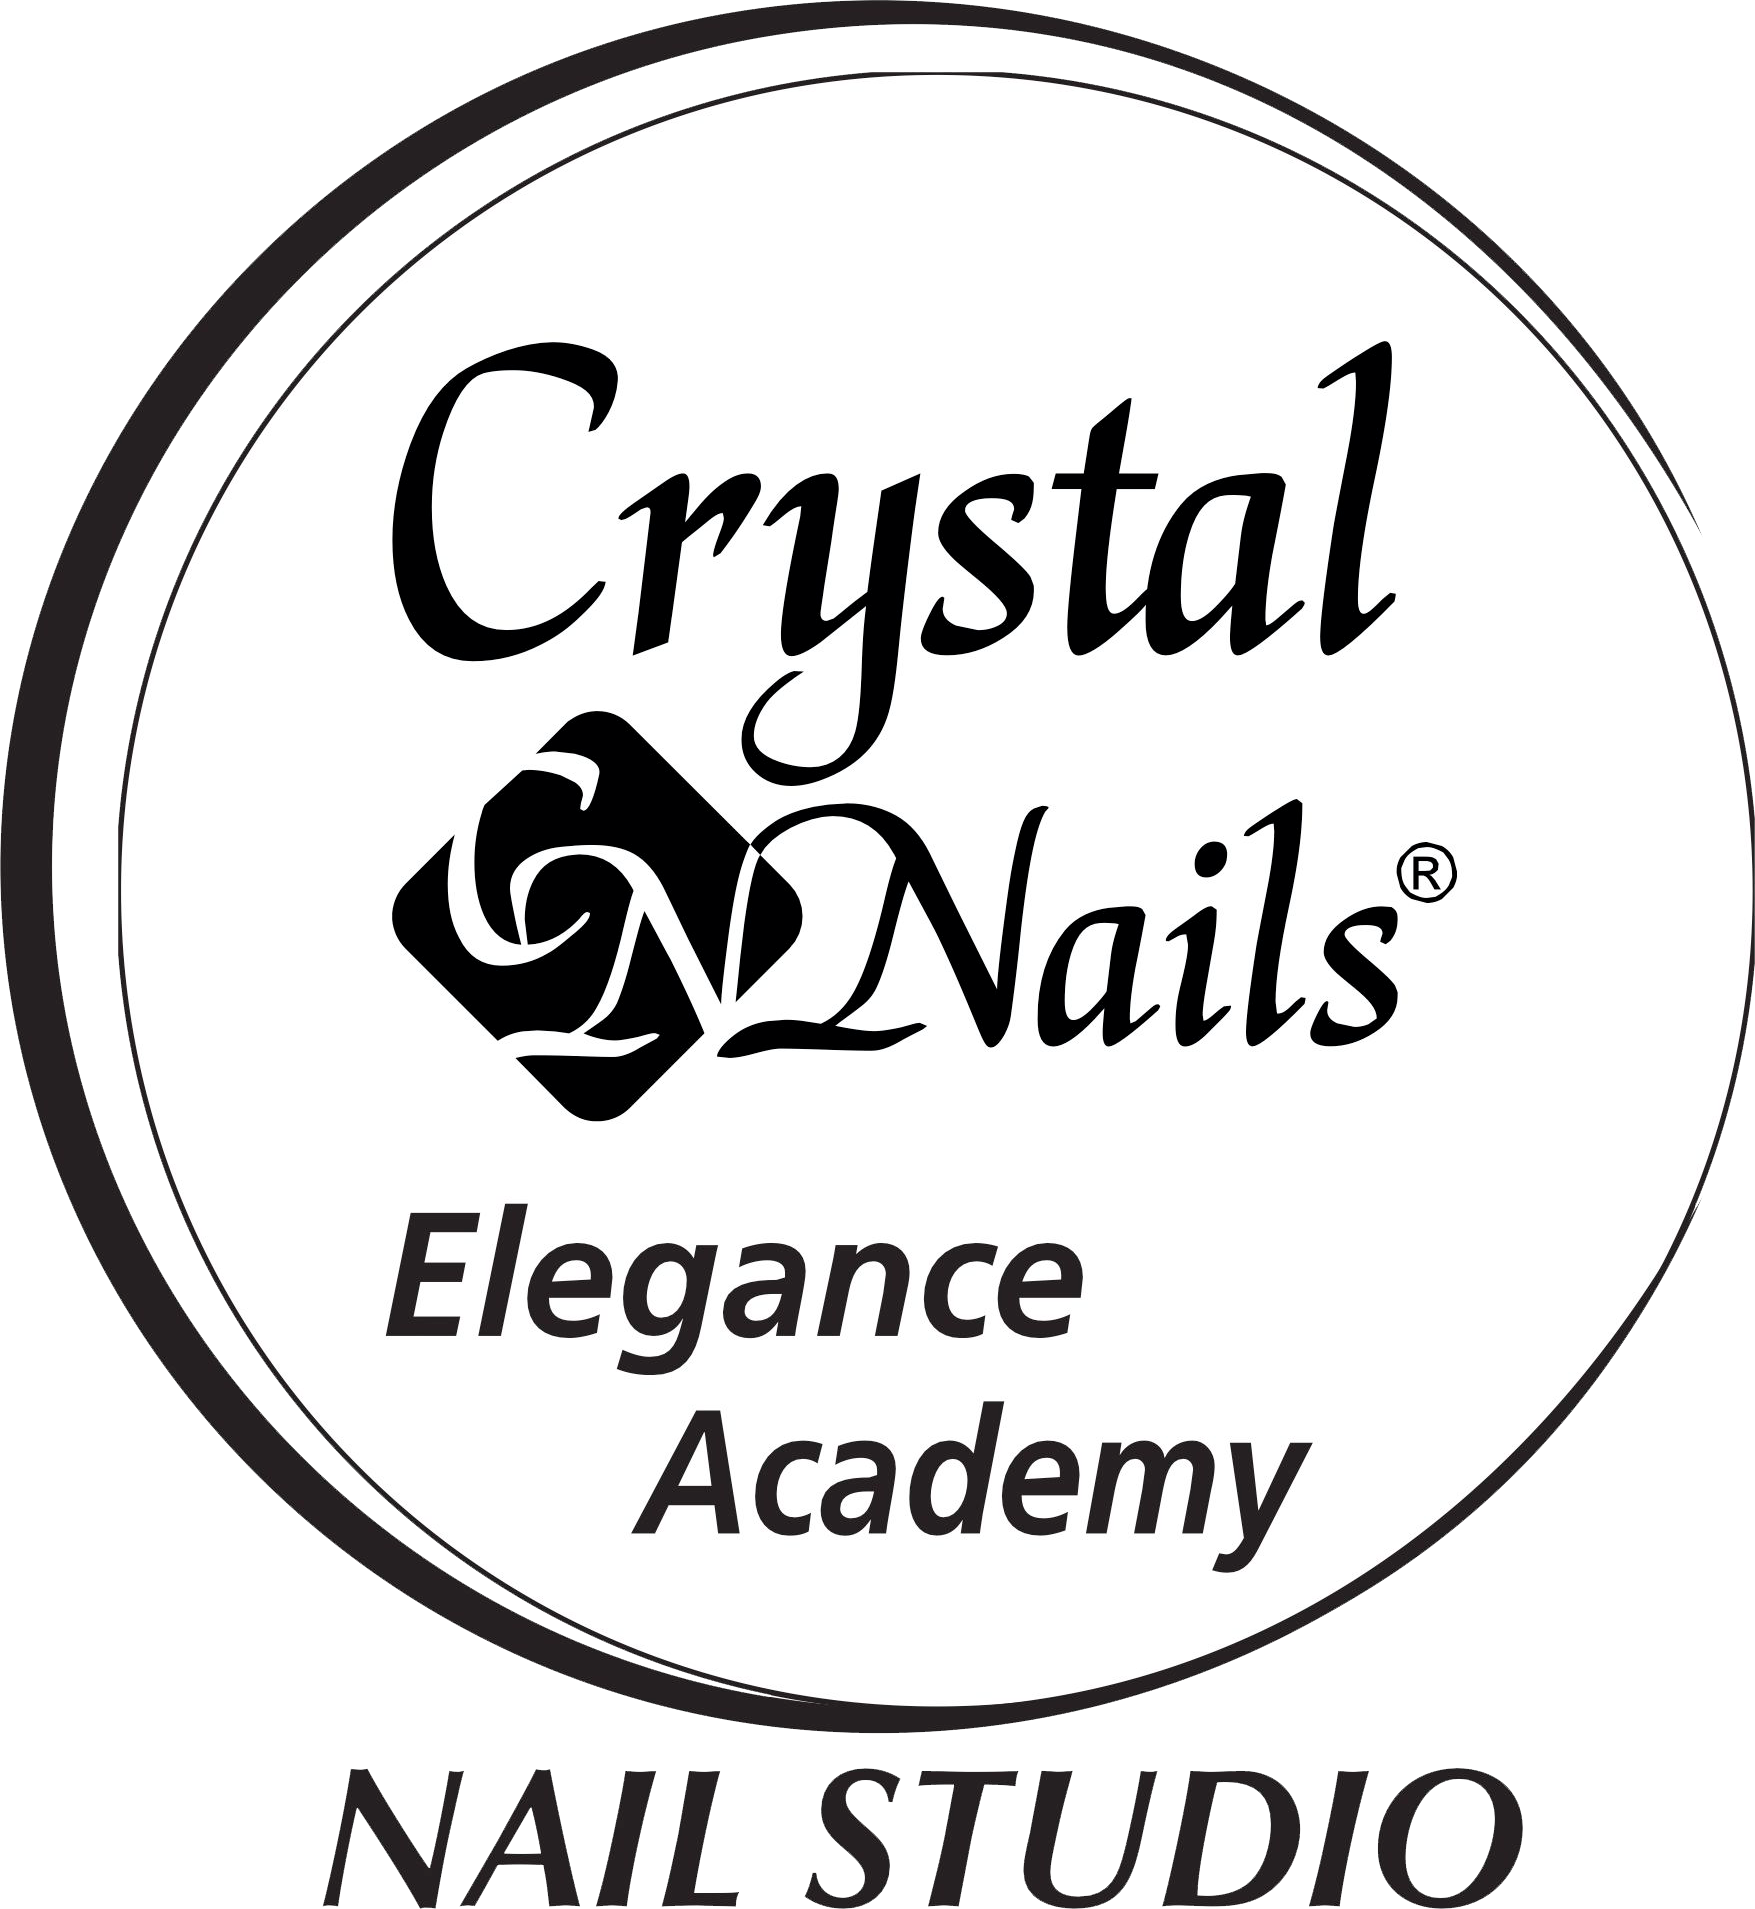 Elegance Academy Crystal Nails
